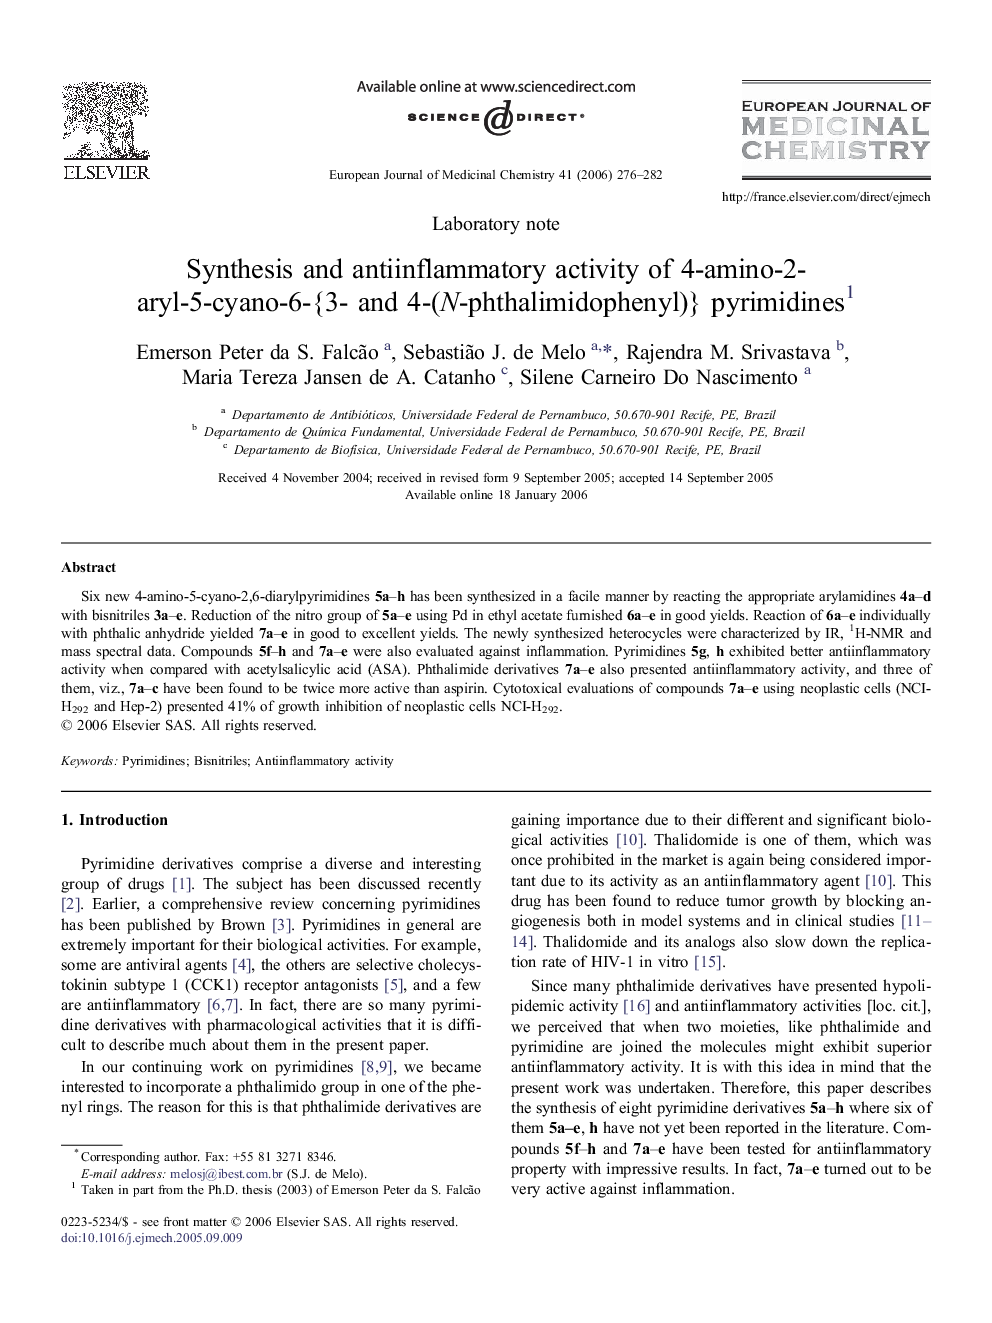 Synthesis and antiinflammatory activity of 4-amino-2-aryl-5-cyano-6-{3- and 4-(N-phthalimidophenyl)} pyrimidines 1